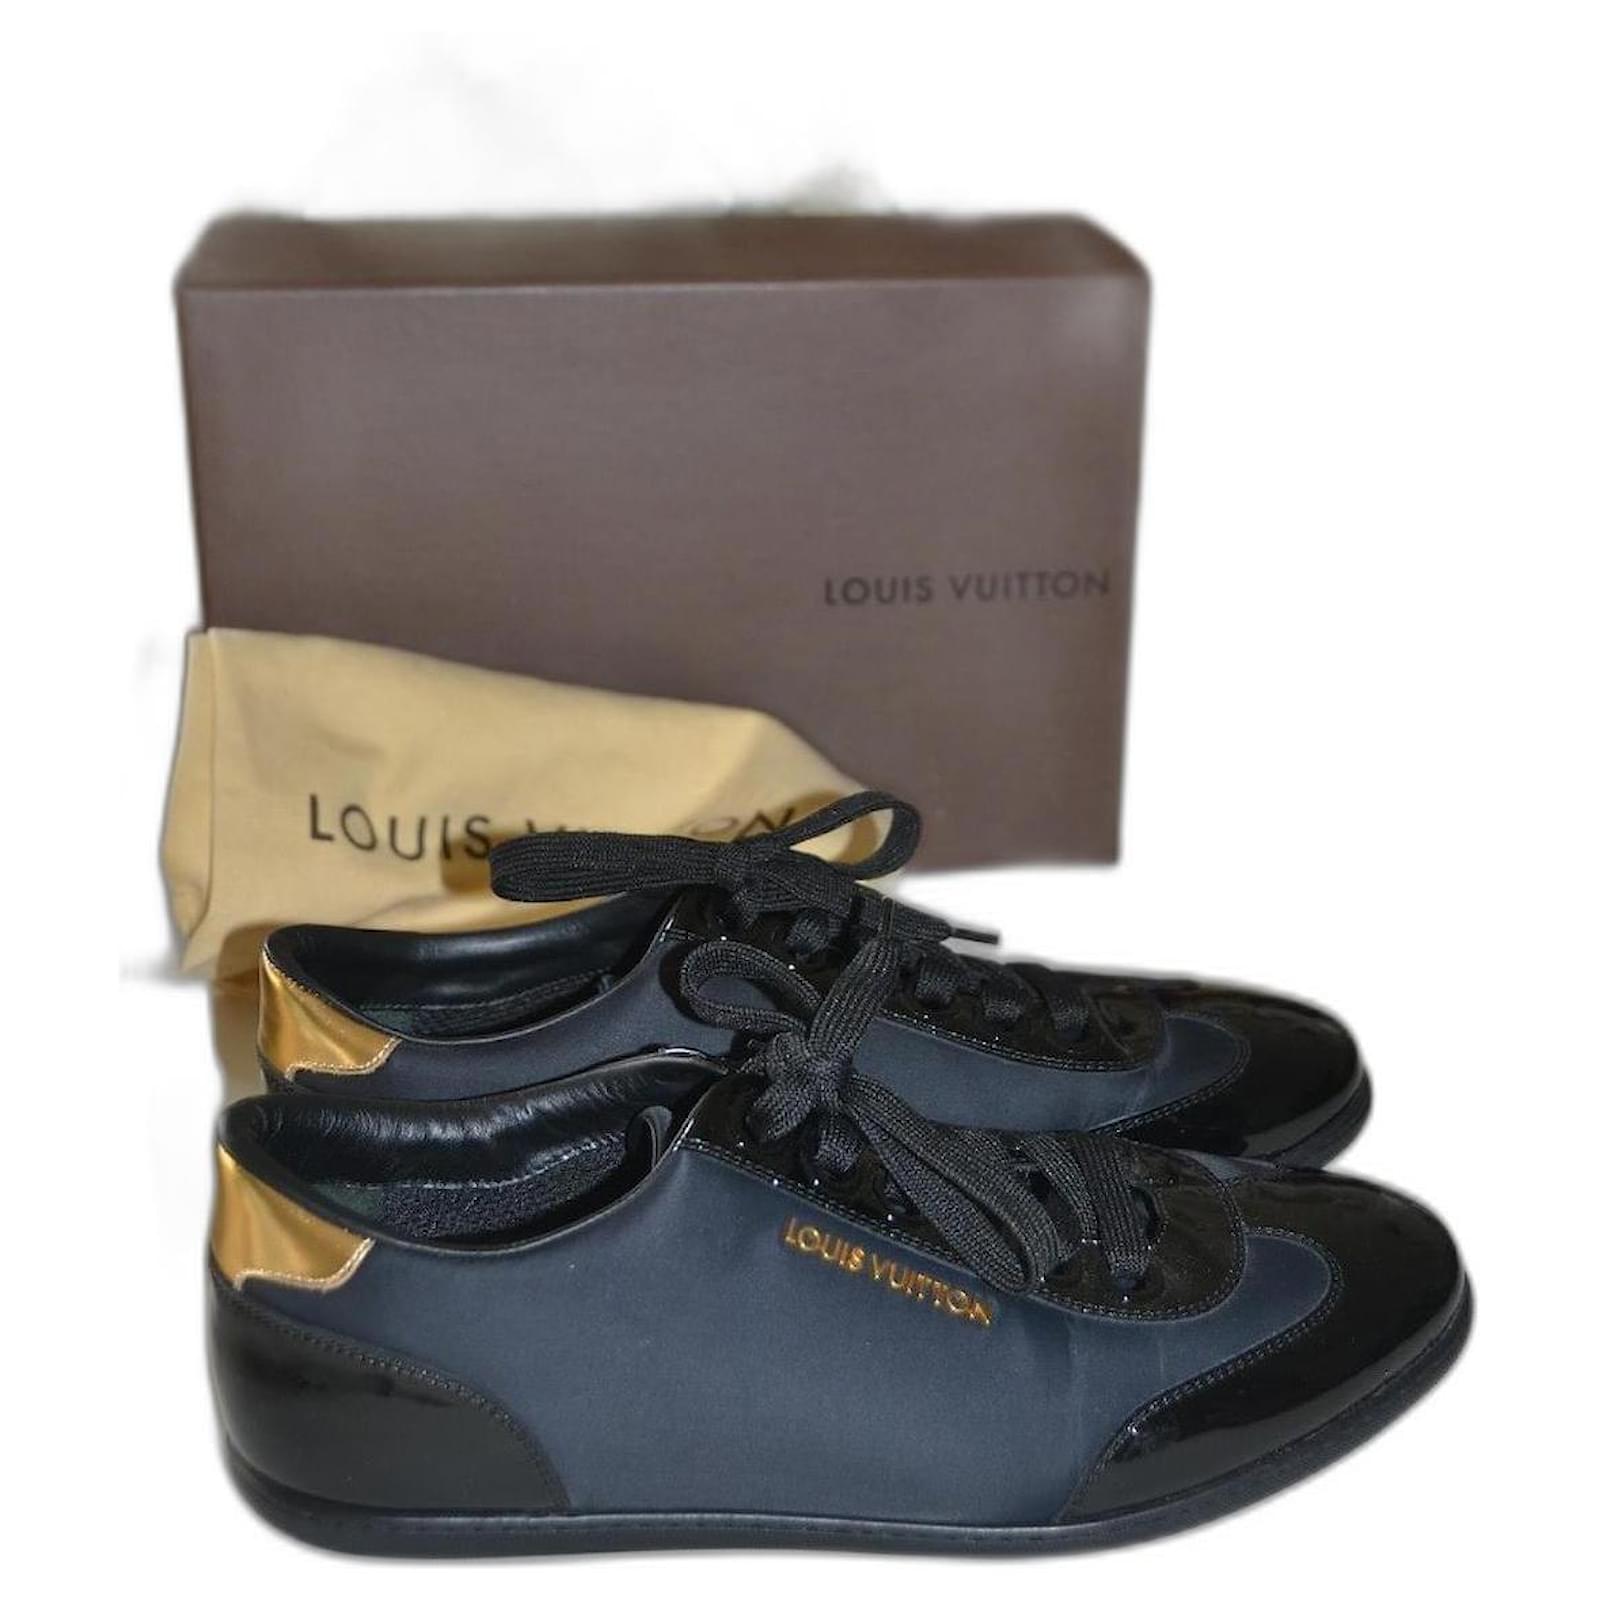 Louis Vuitton, Shoes, Louis Vuitton Millennium Sneakers Wedge Used